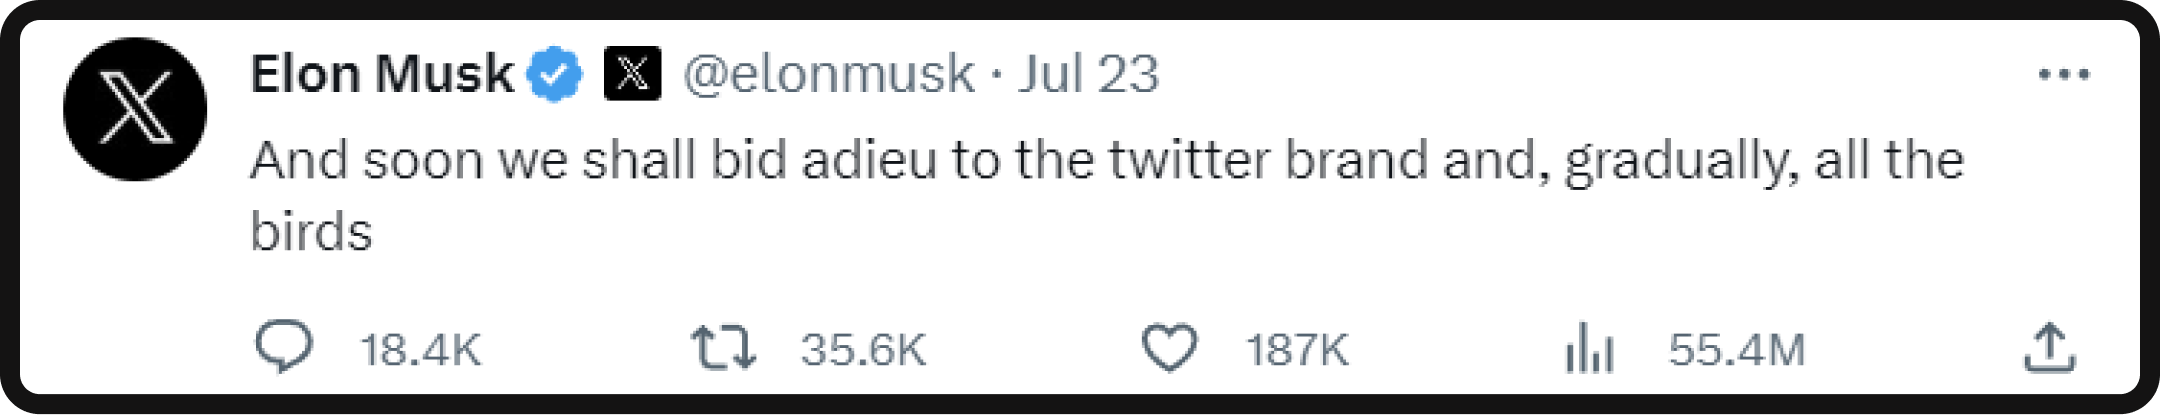 Elon's tweet announcing the Twitter rebrand. 